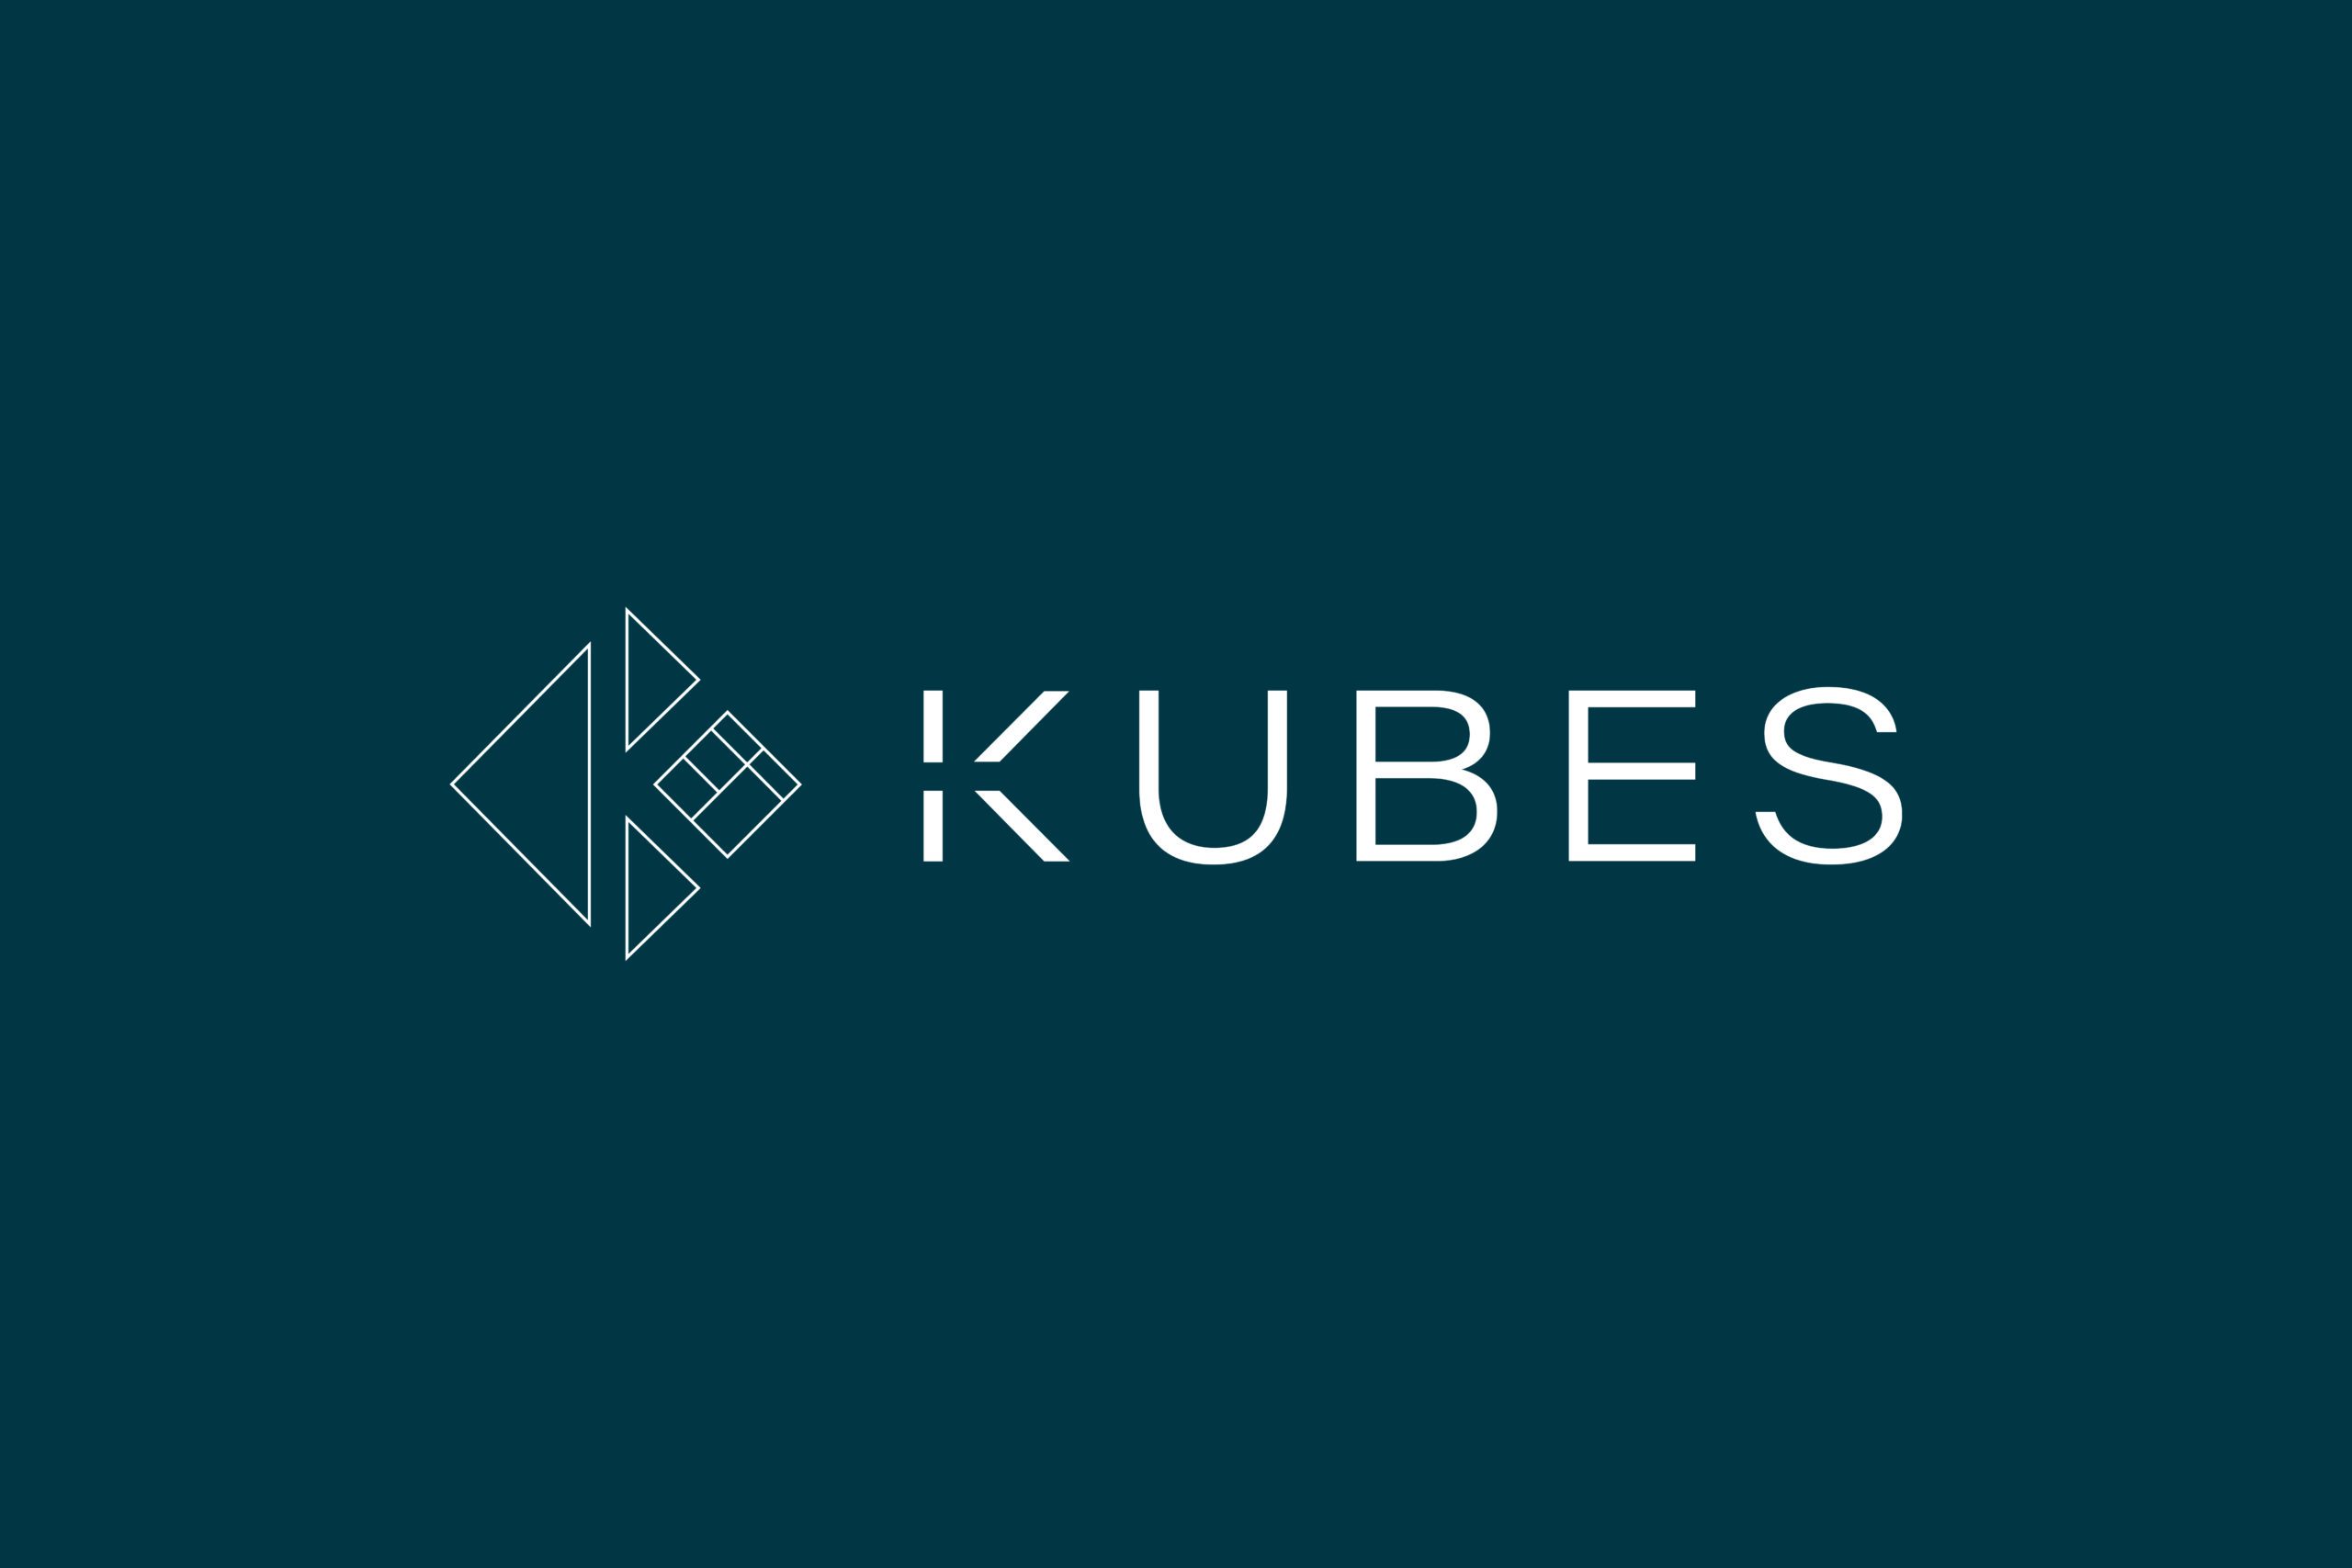 Kubes white logo On Dark Green Background